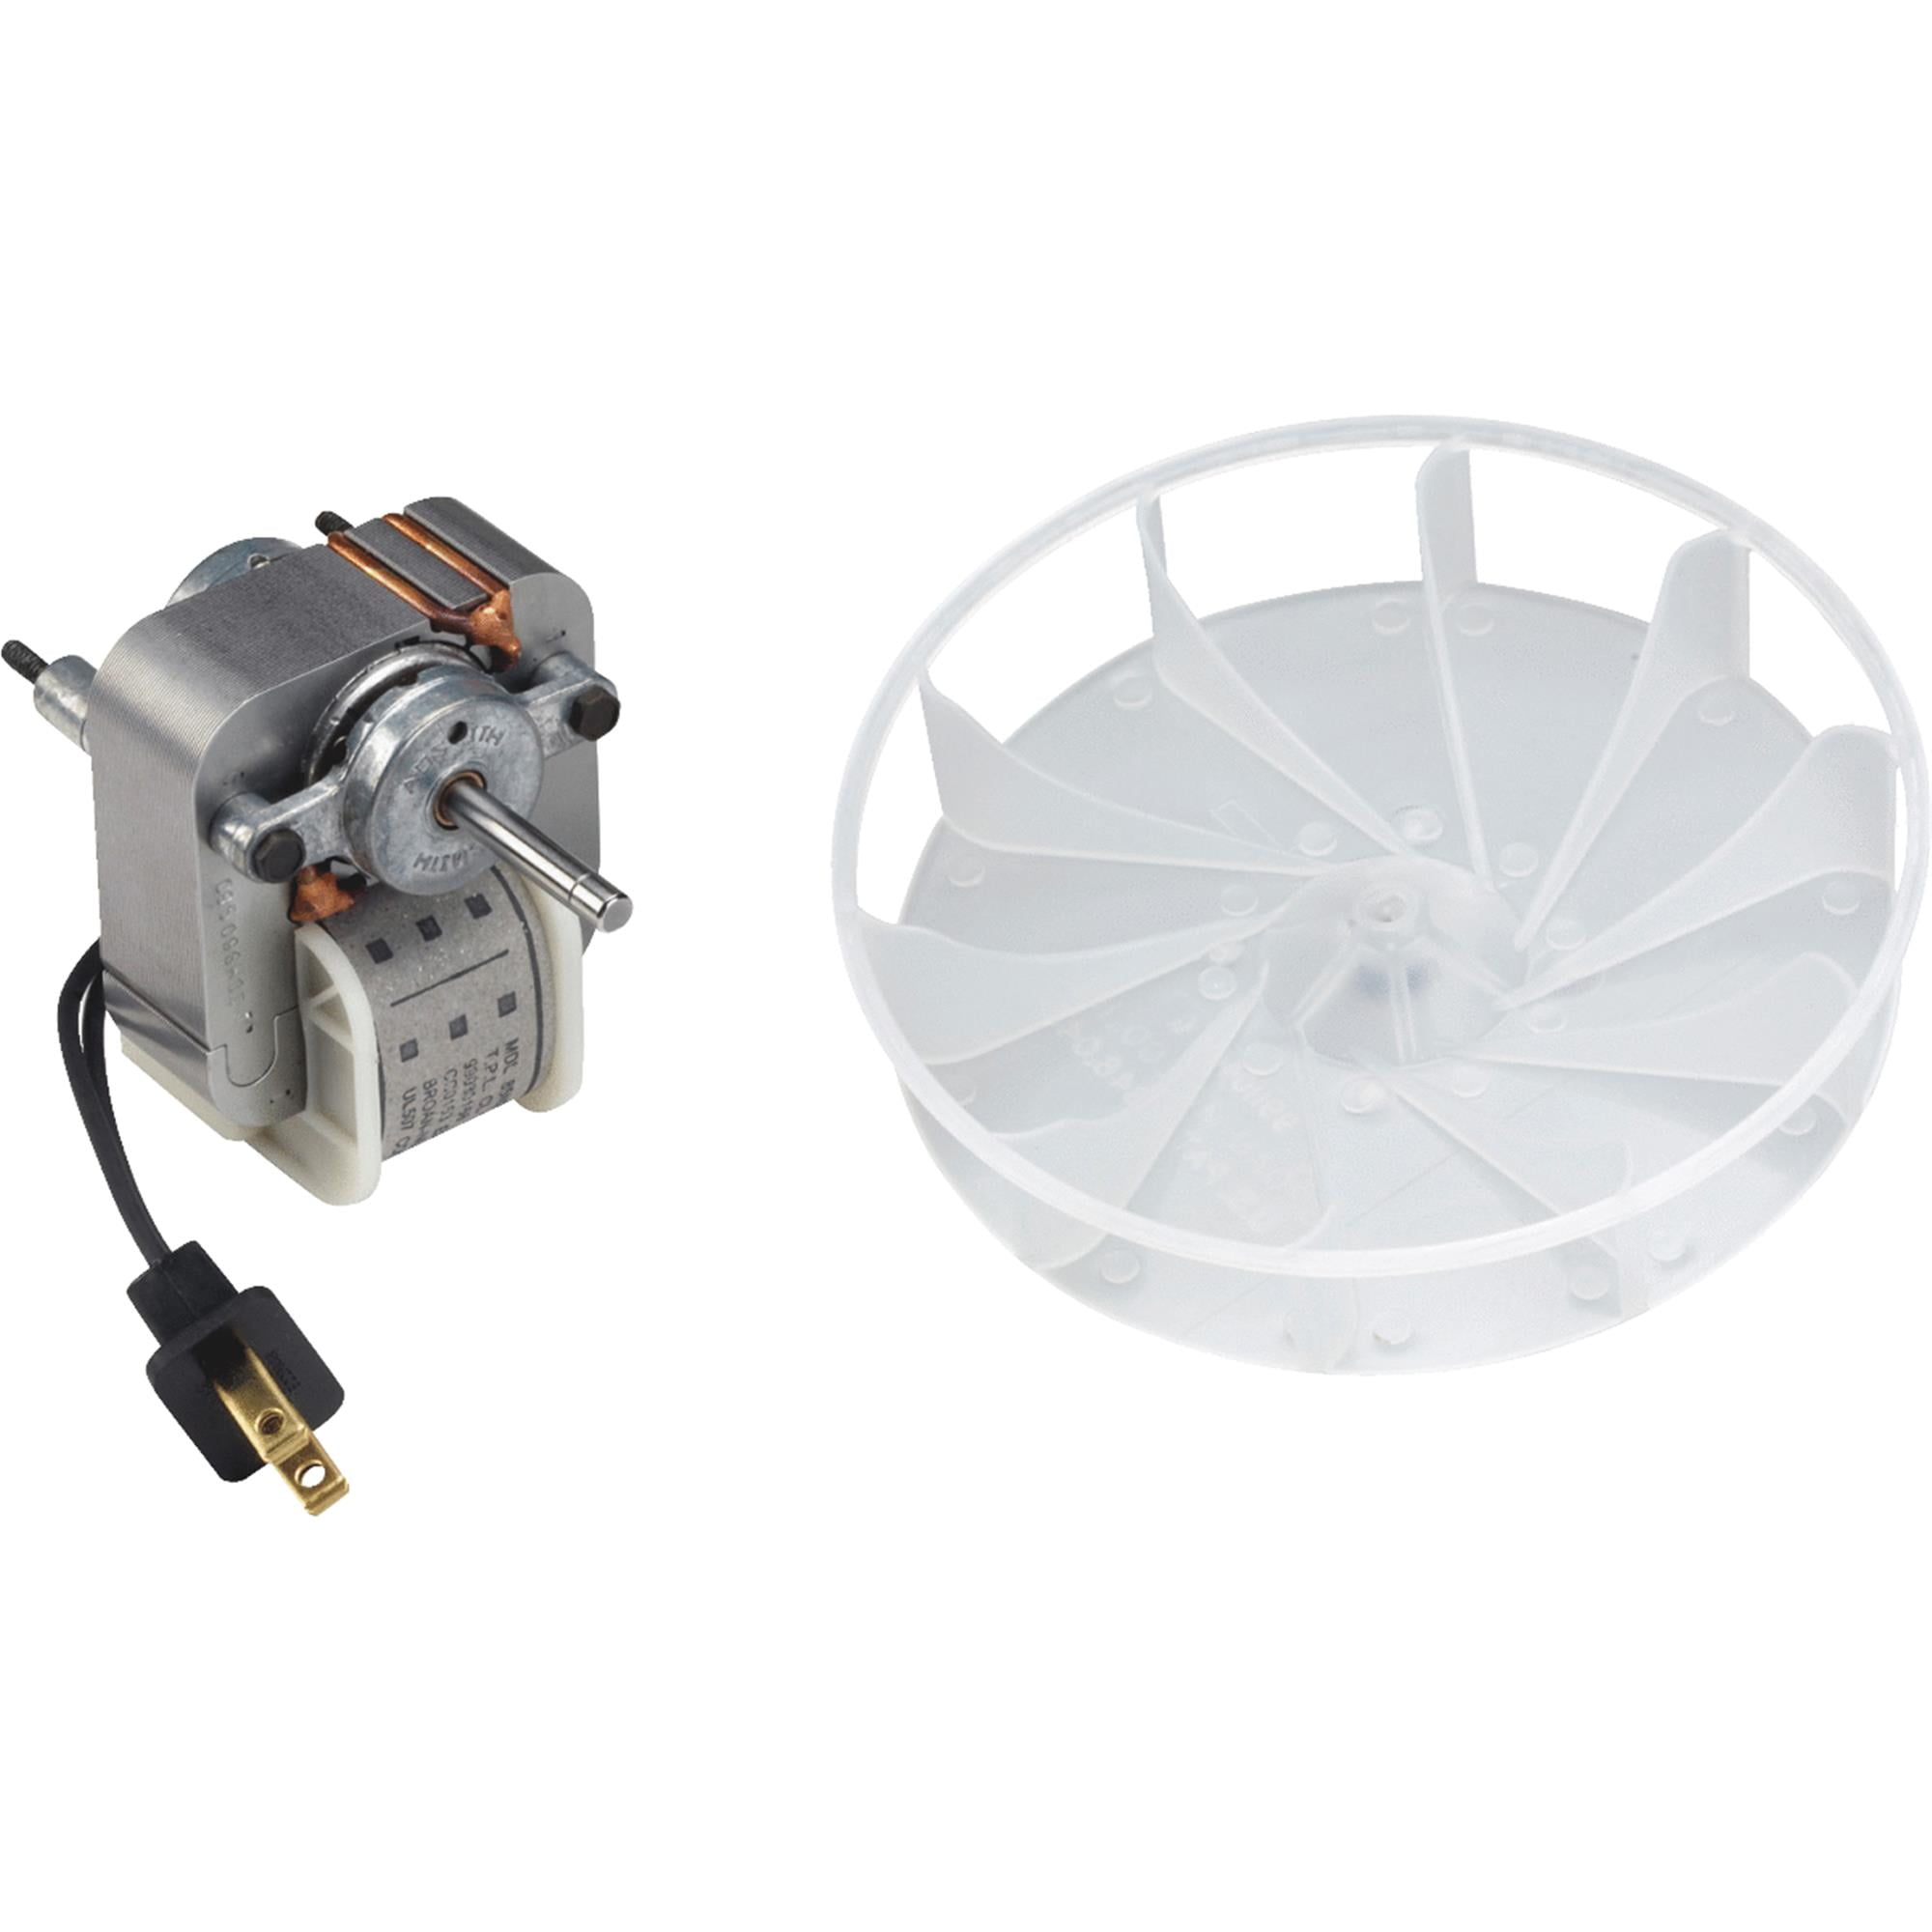 Details about   Broan Nautilus BP27 50CFM Ventilation Fan Motor & Blower Wheel New In Box 